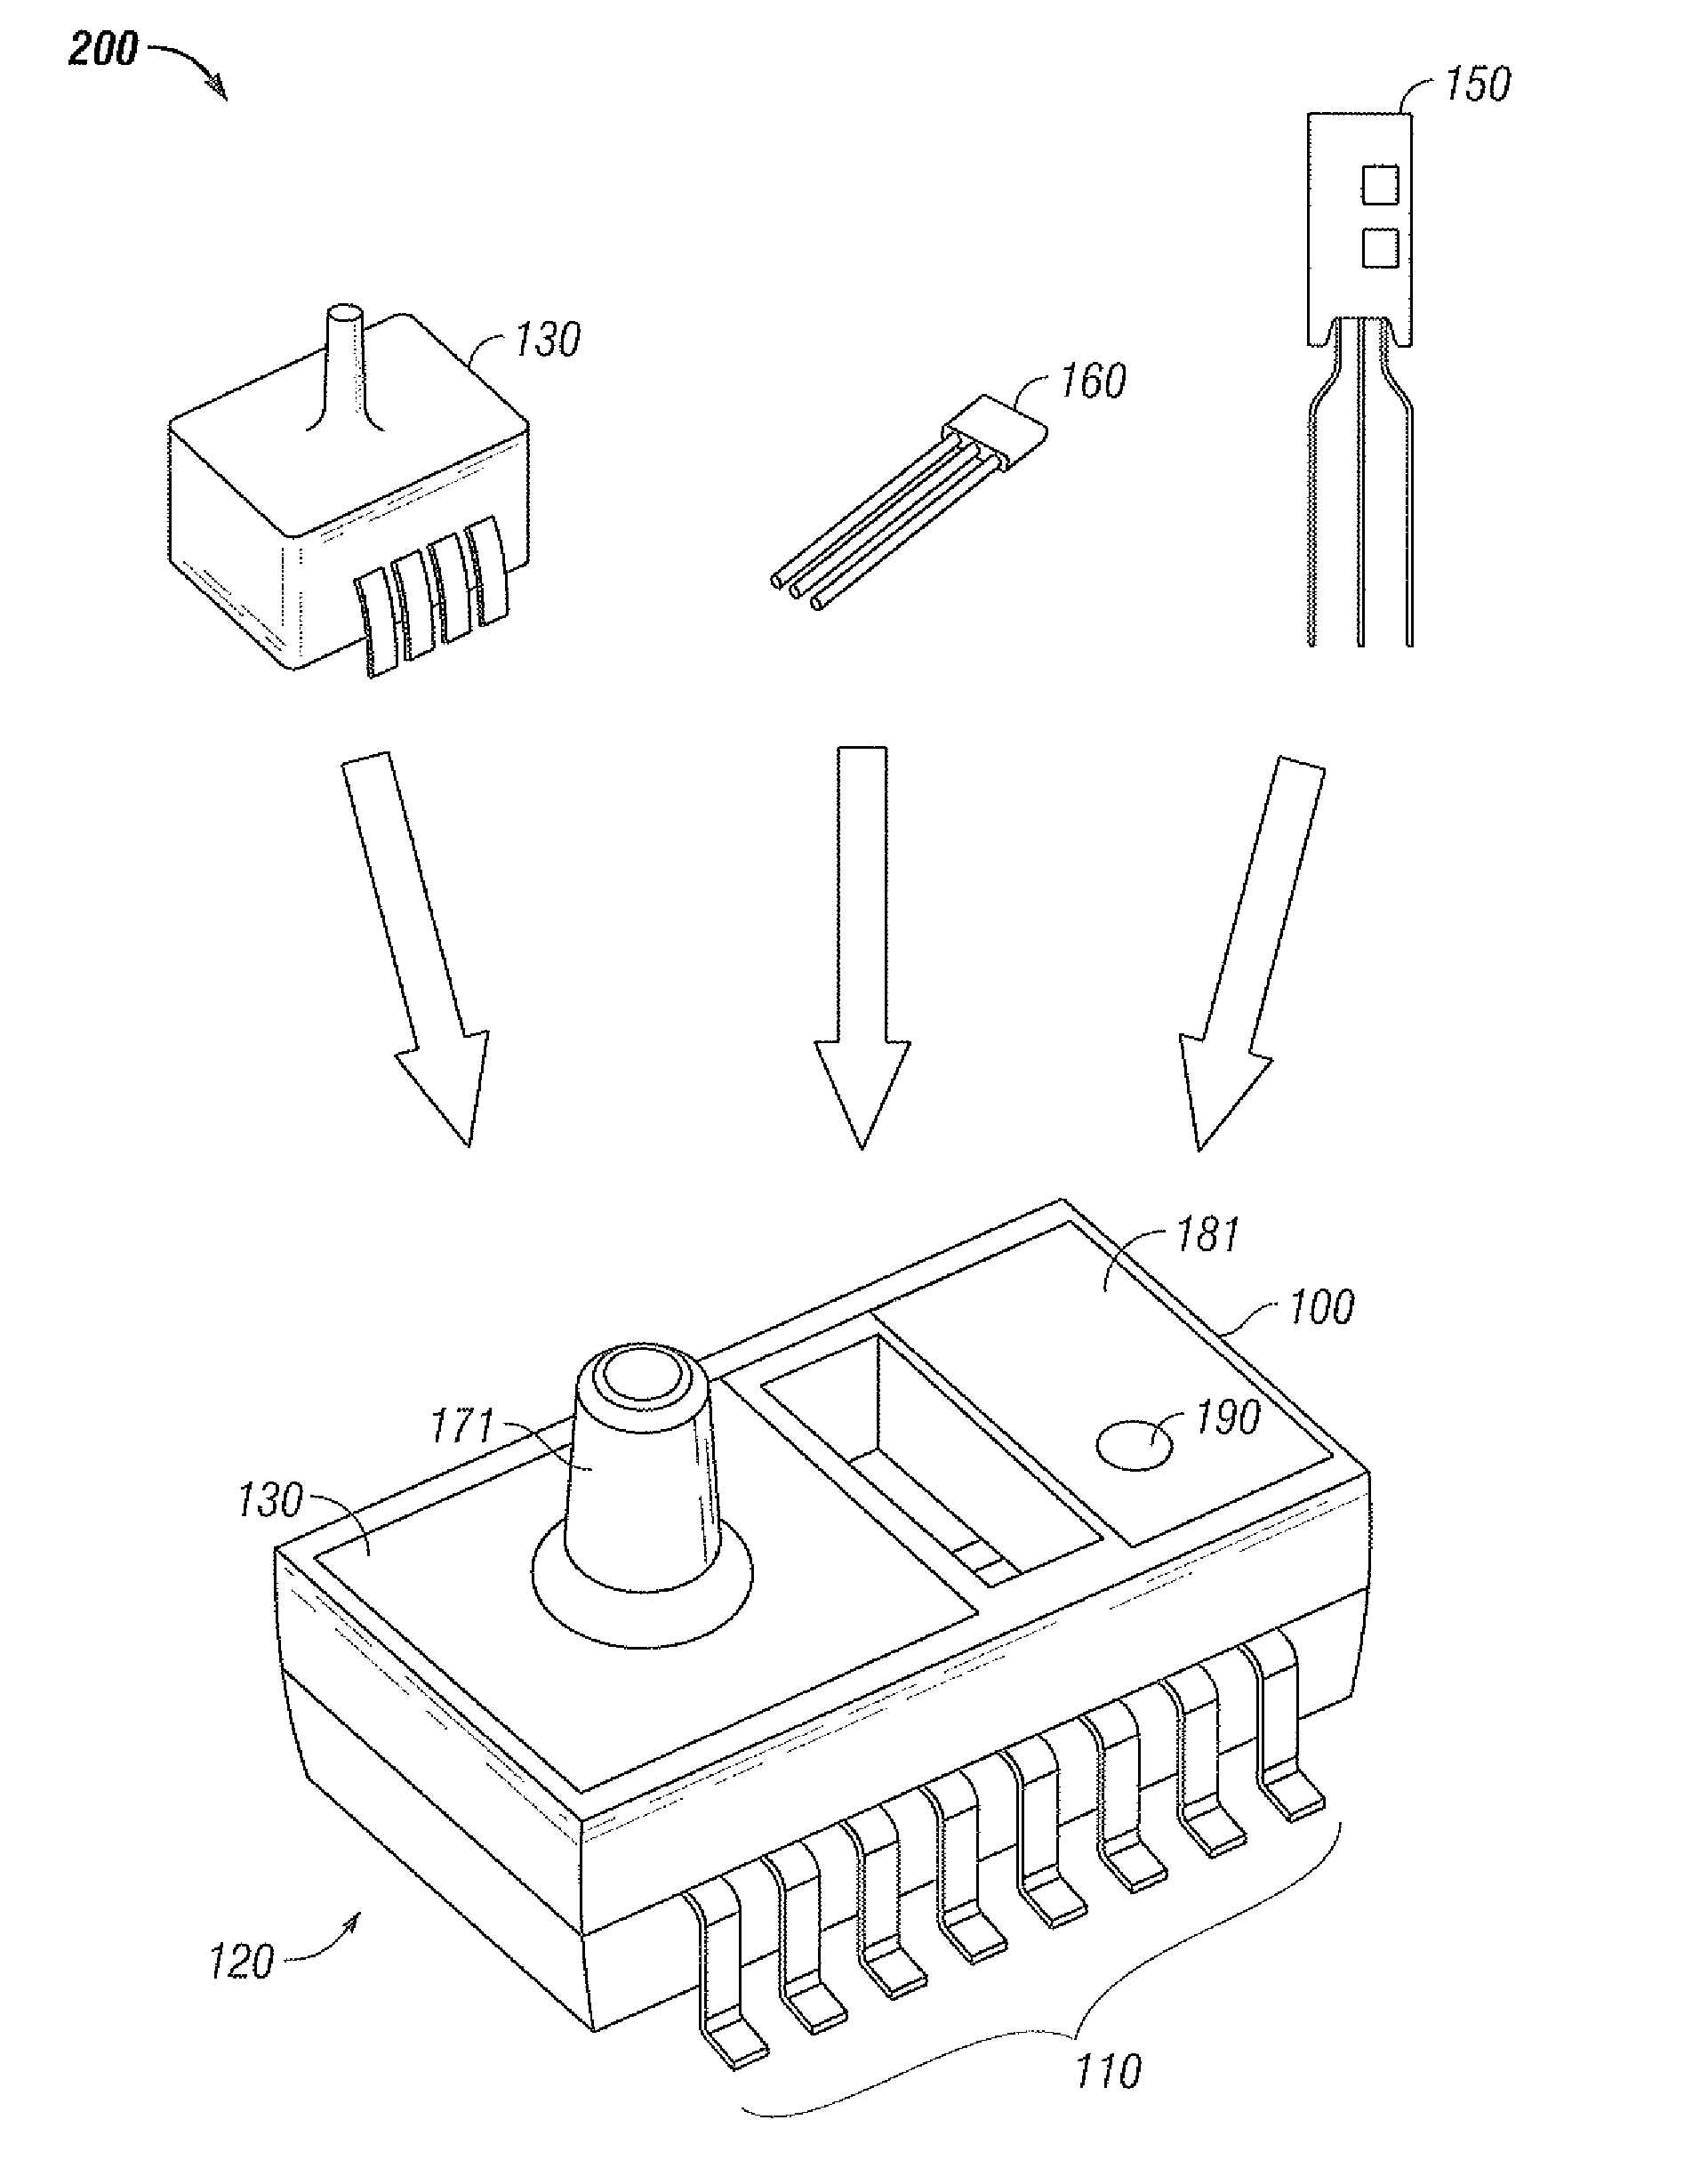 Integrated mechanical package design for combi sensor apparatus